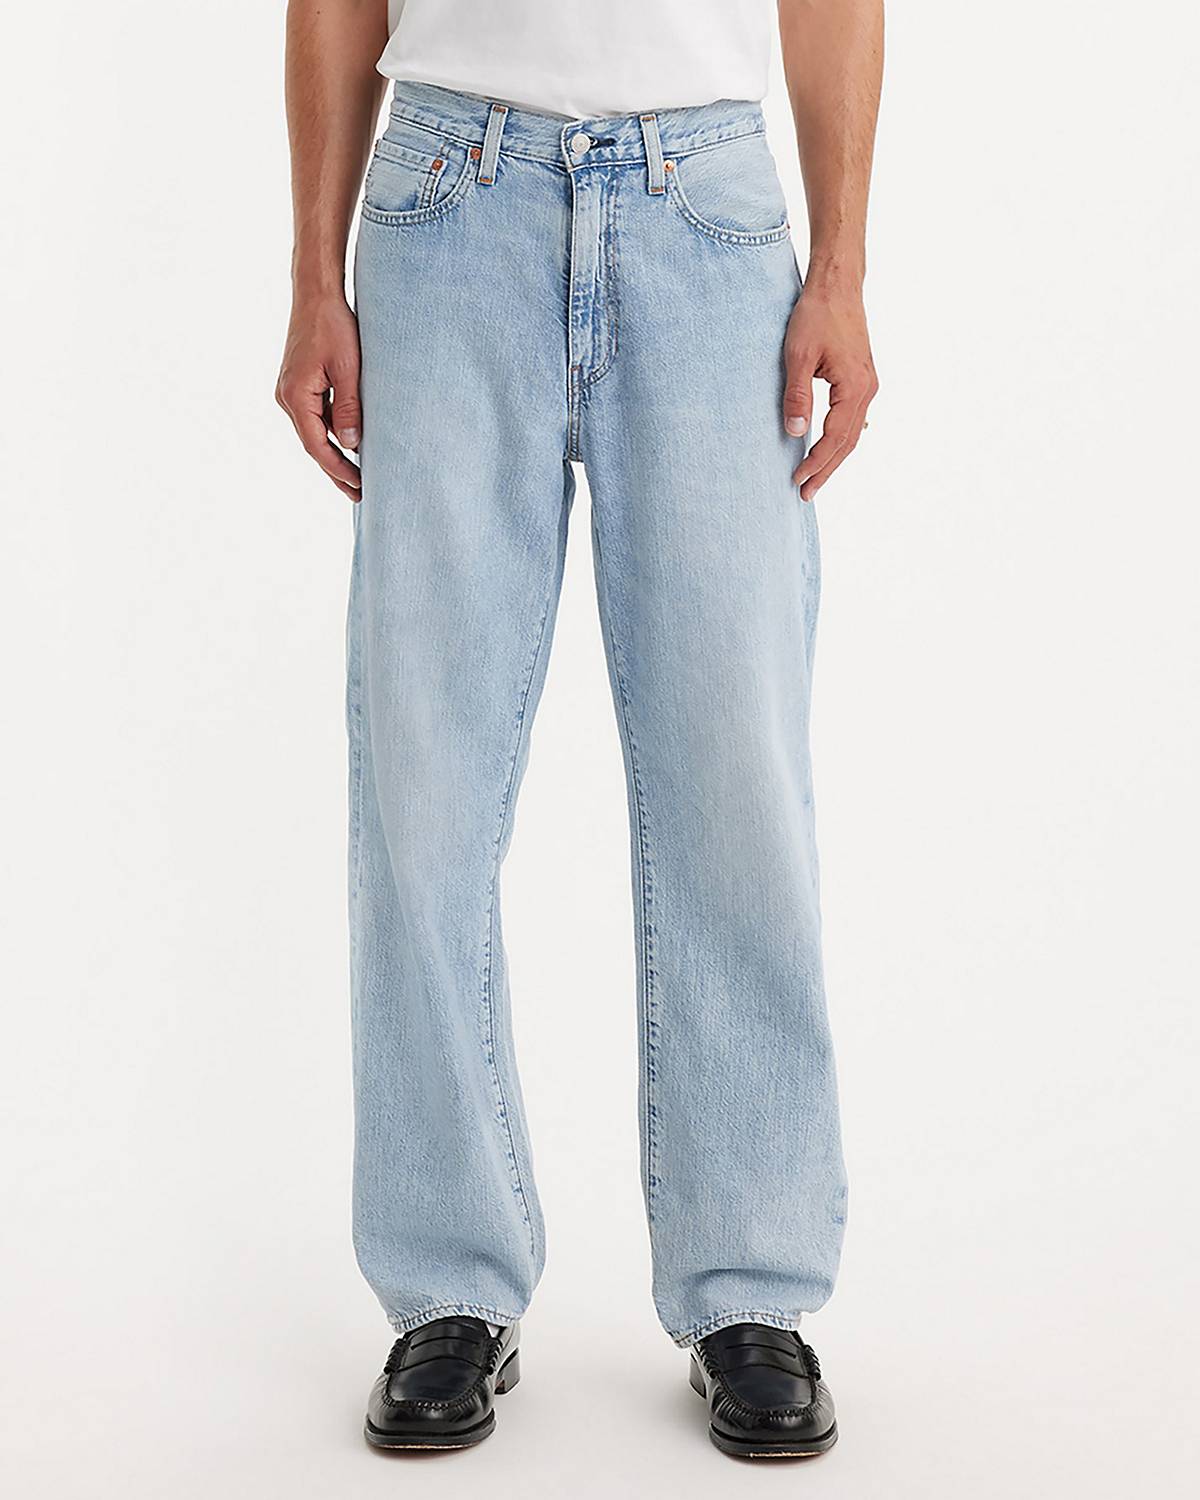 Selvedge Denim Jeans Collection for Men